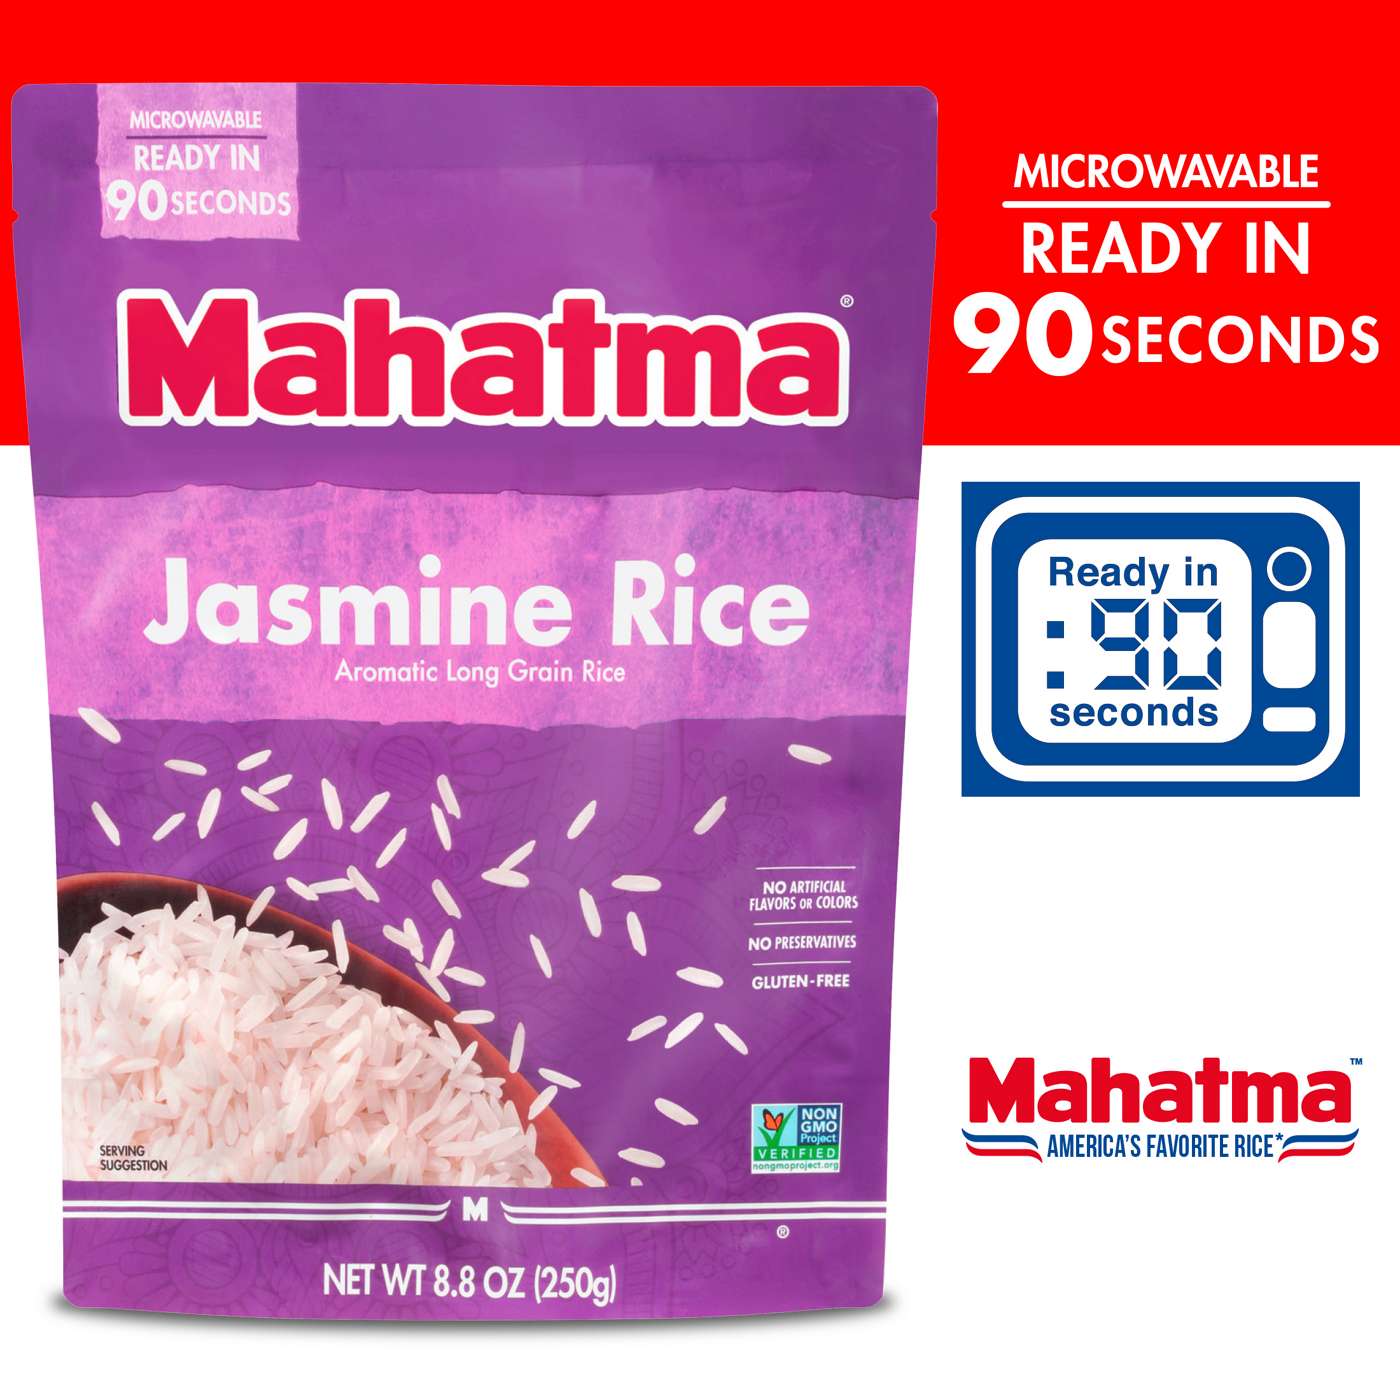 Mahatma Jasmine Aromatic Long Grain Rice; image 5 of 6